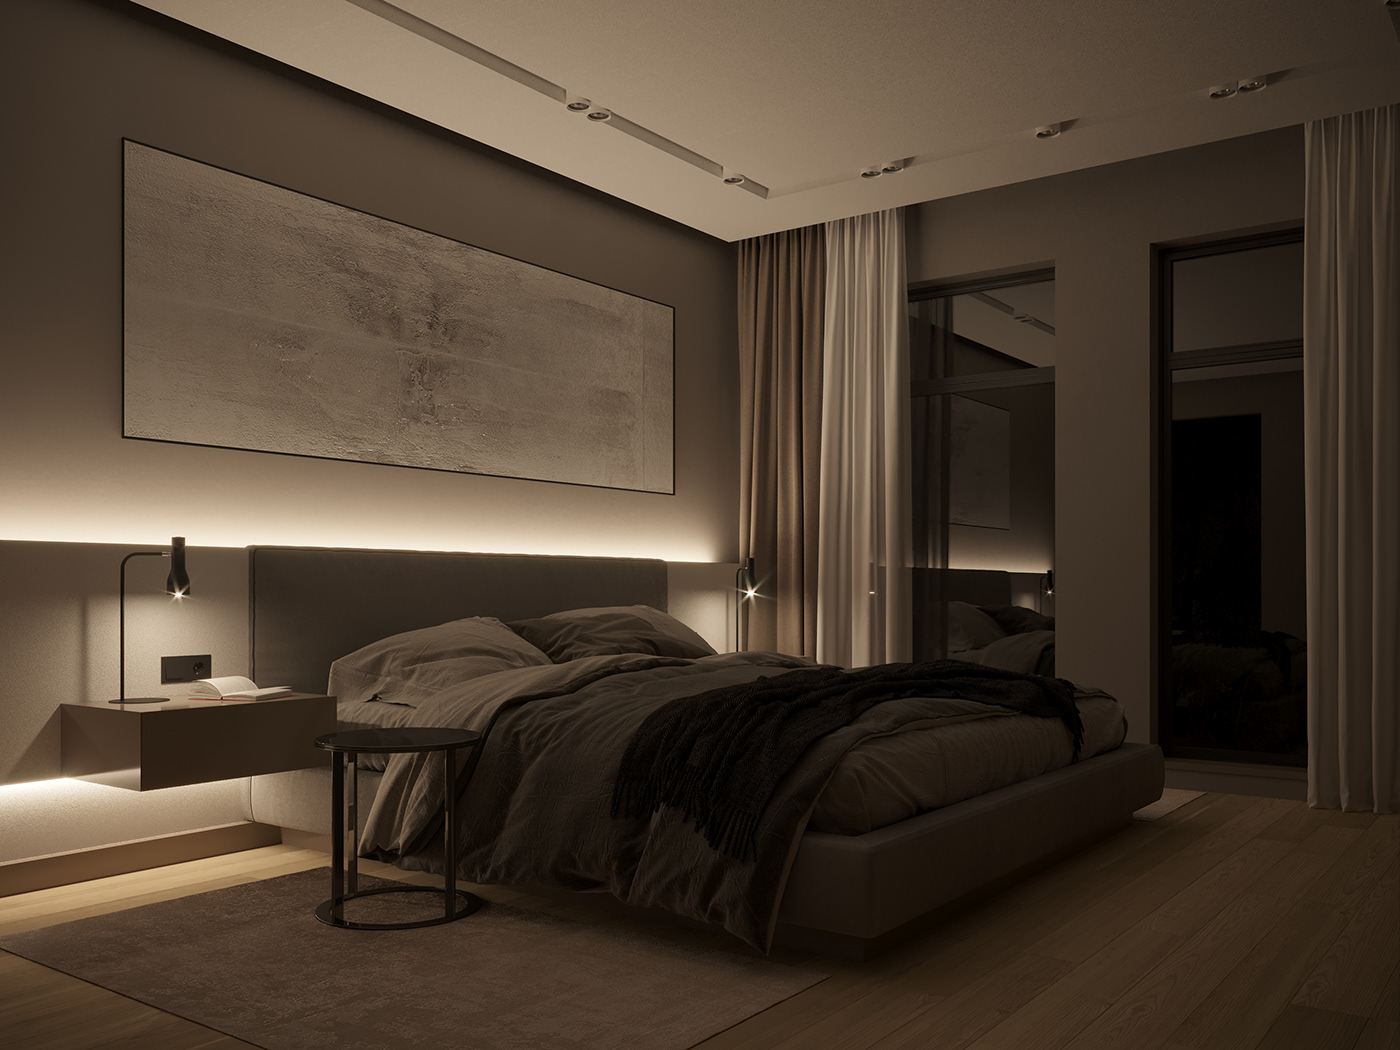 8 Minimalist Bedroom Design Tips